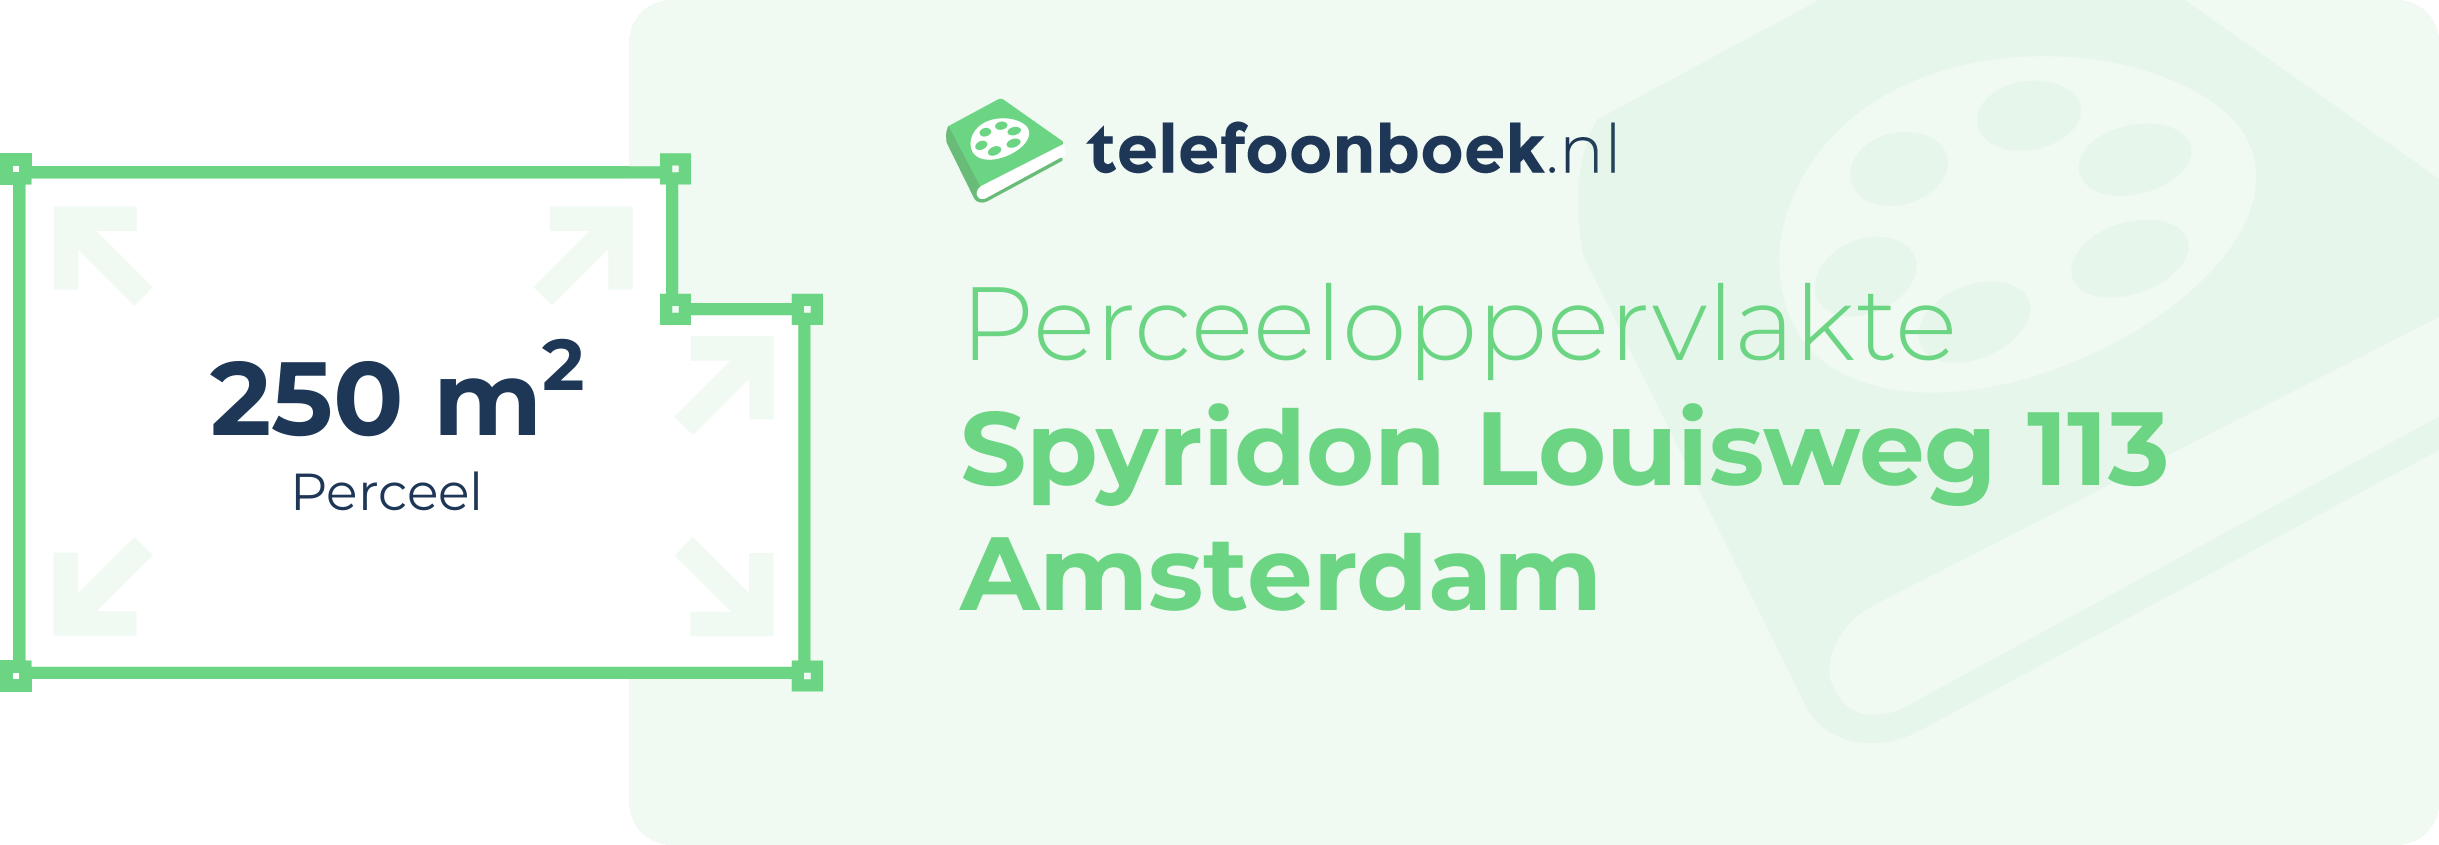 Perceeloppervlakte Spyridon Louisweg 113 Amsterdam